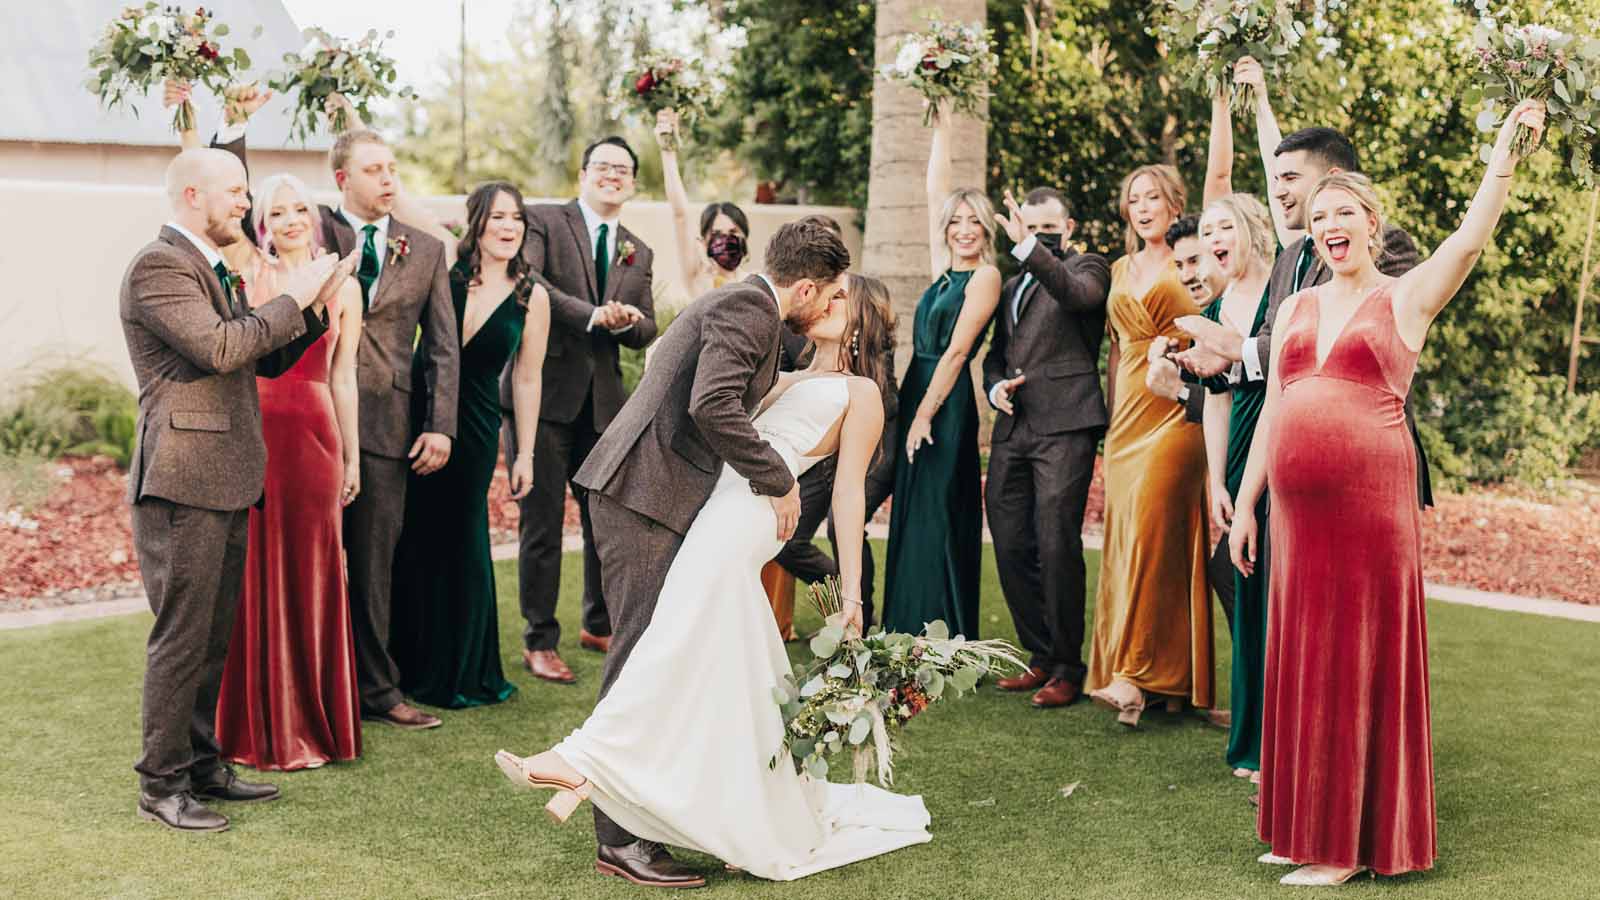 16 Fun Wedding Party Photo Ideas